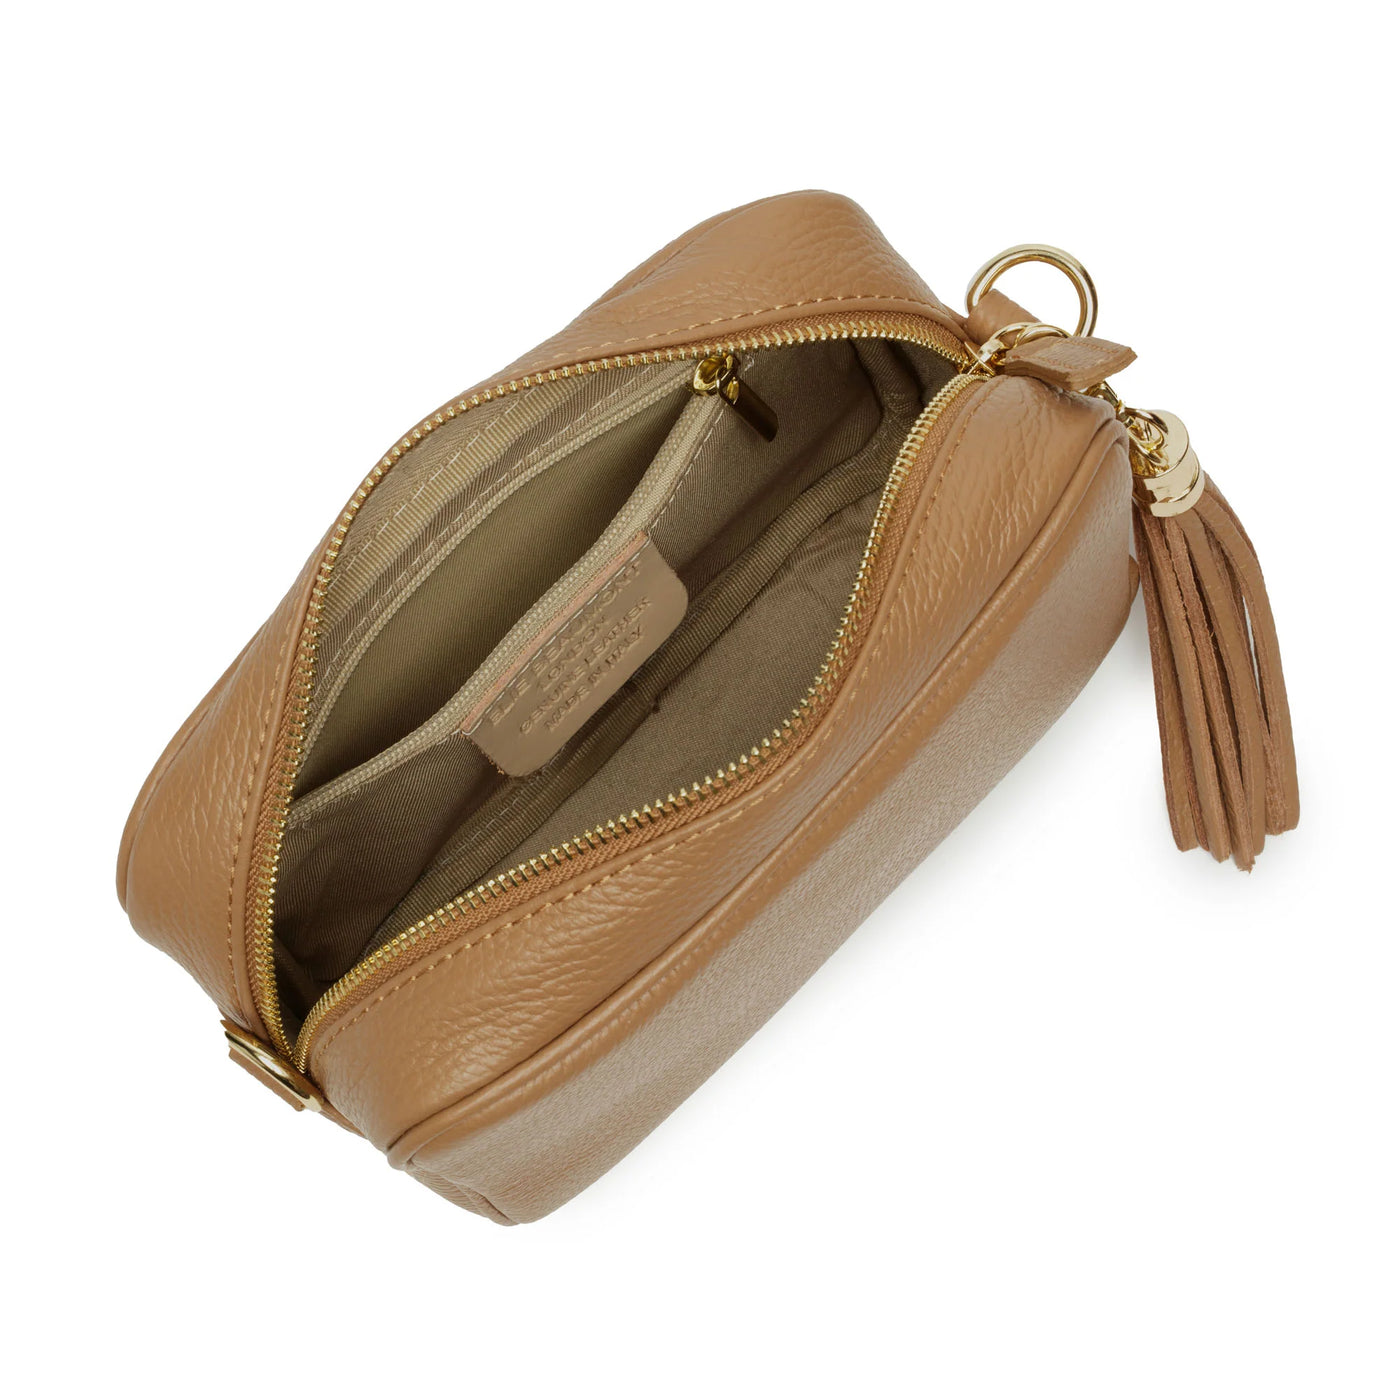 Elie Beaumont Designer Leather Crossbody Bag - Camel (GOLD Fittings)